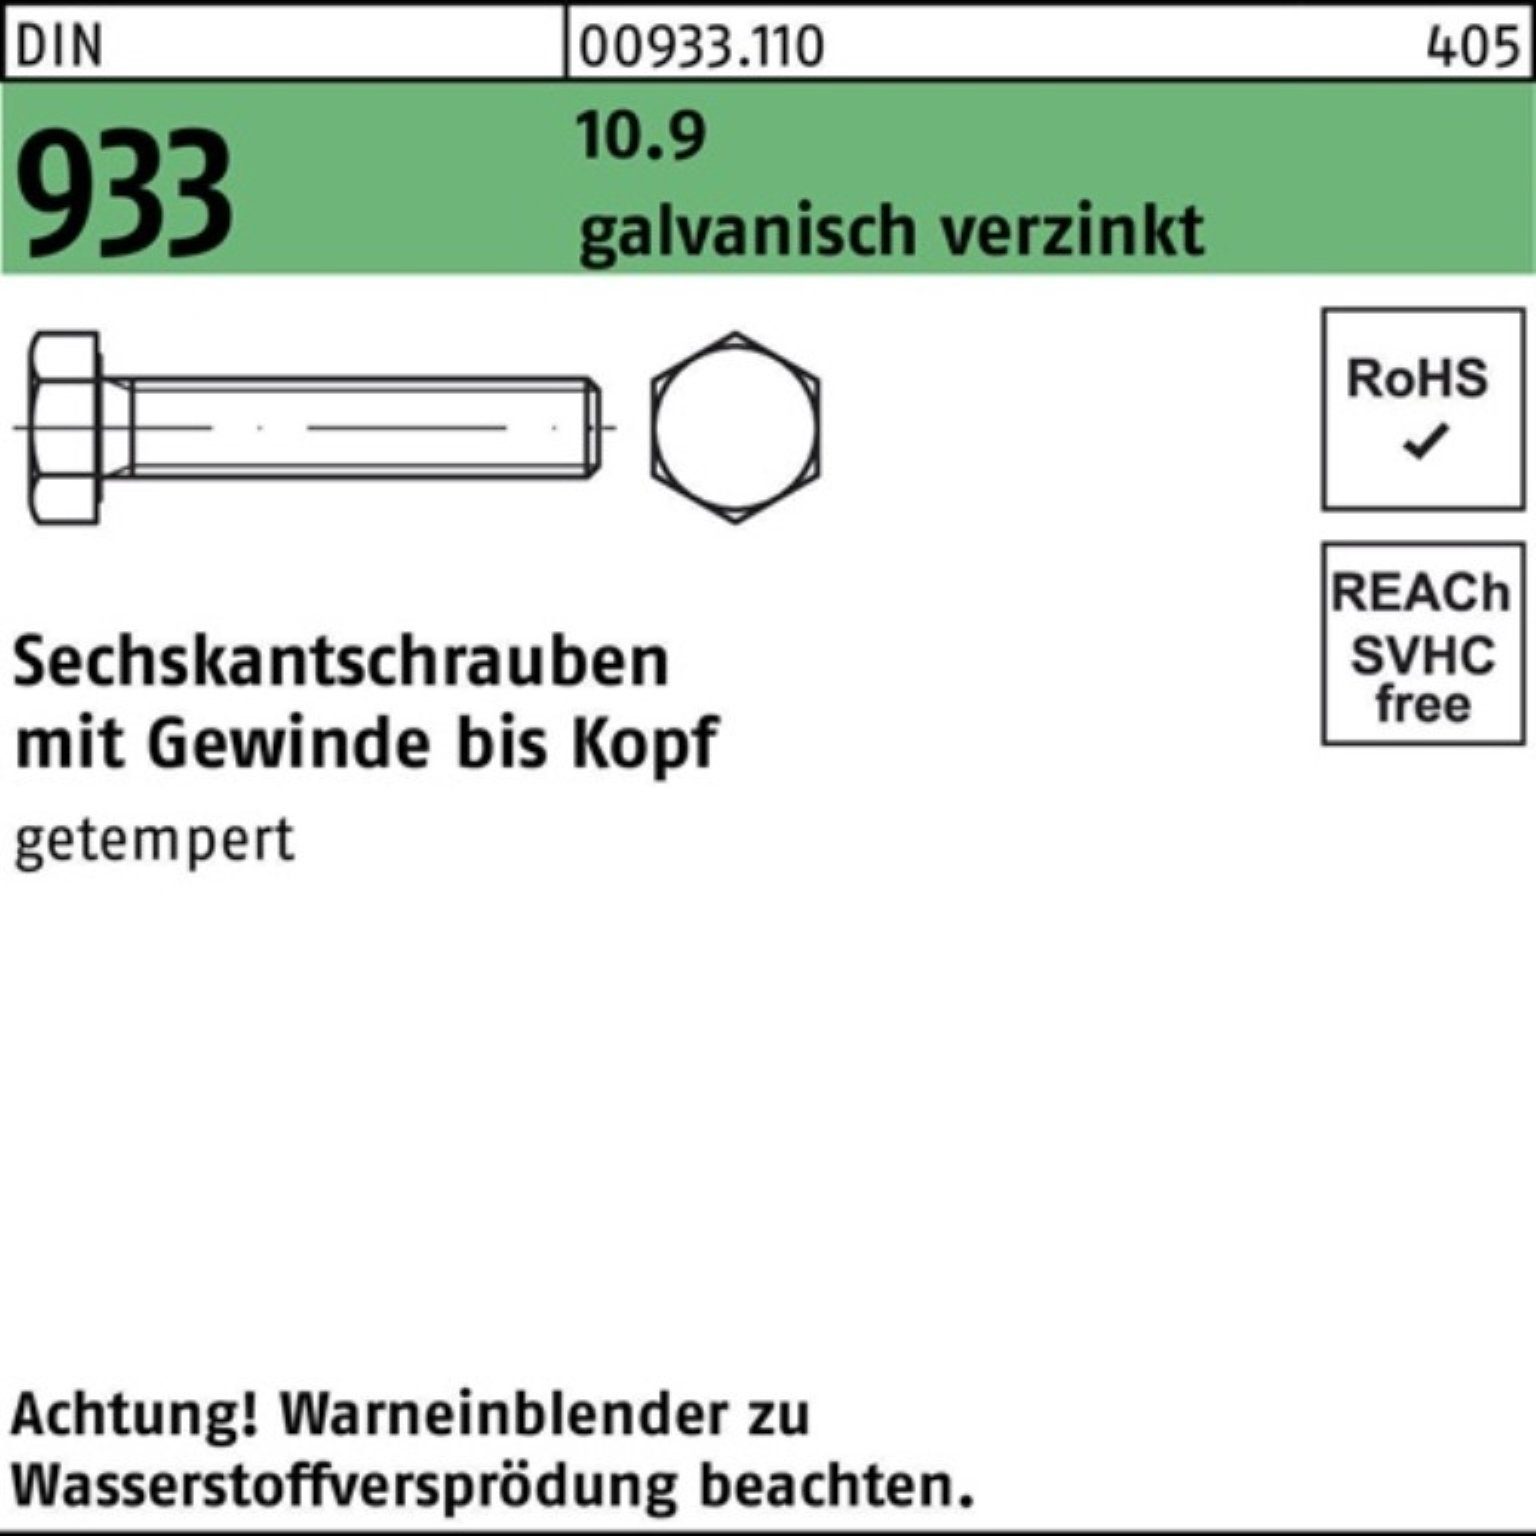 M30x Reyher galv.verz. DIN Pack 55 100er 933 Sechskantschraube Stü VG 1 Sechskantschraube 10.9